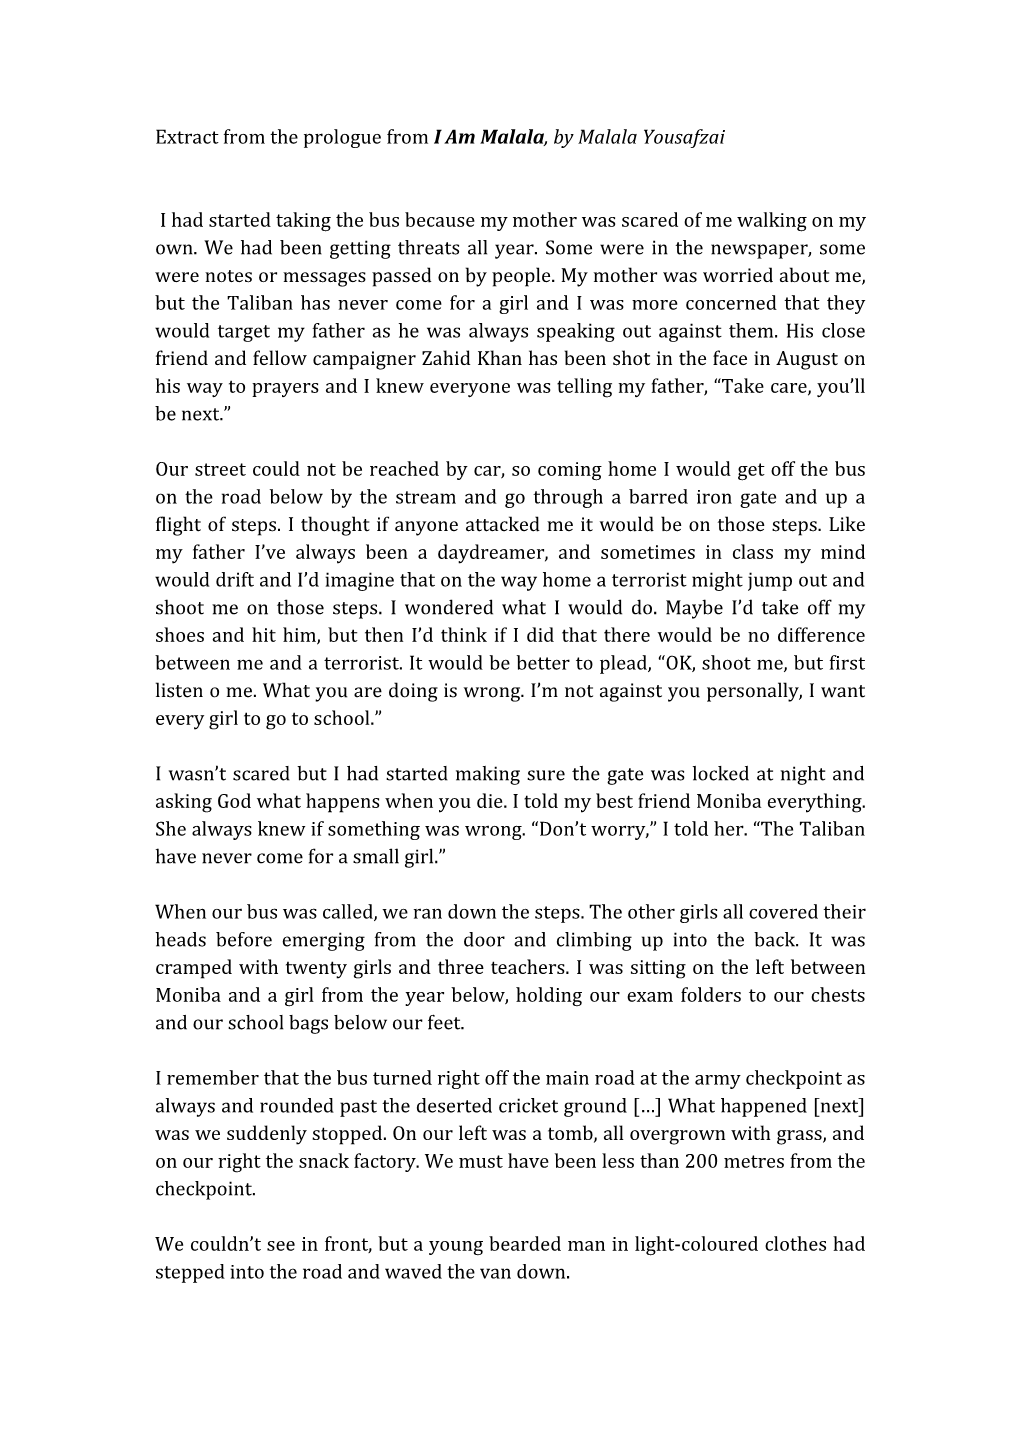 Extract from the Prologue from I Am Malala, by Malala Yousafzai